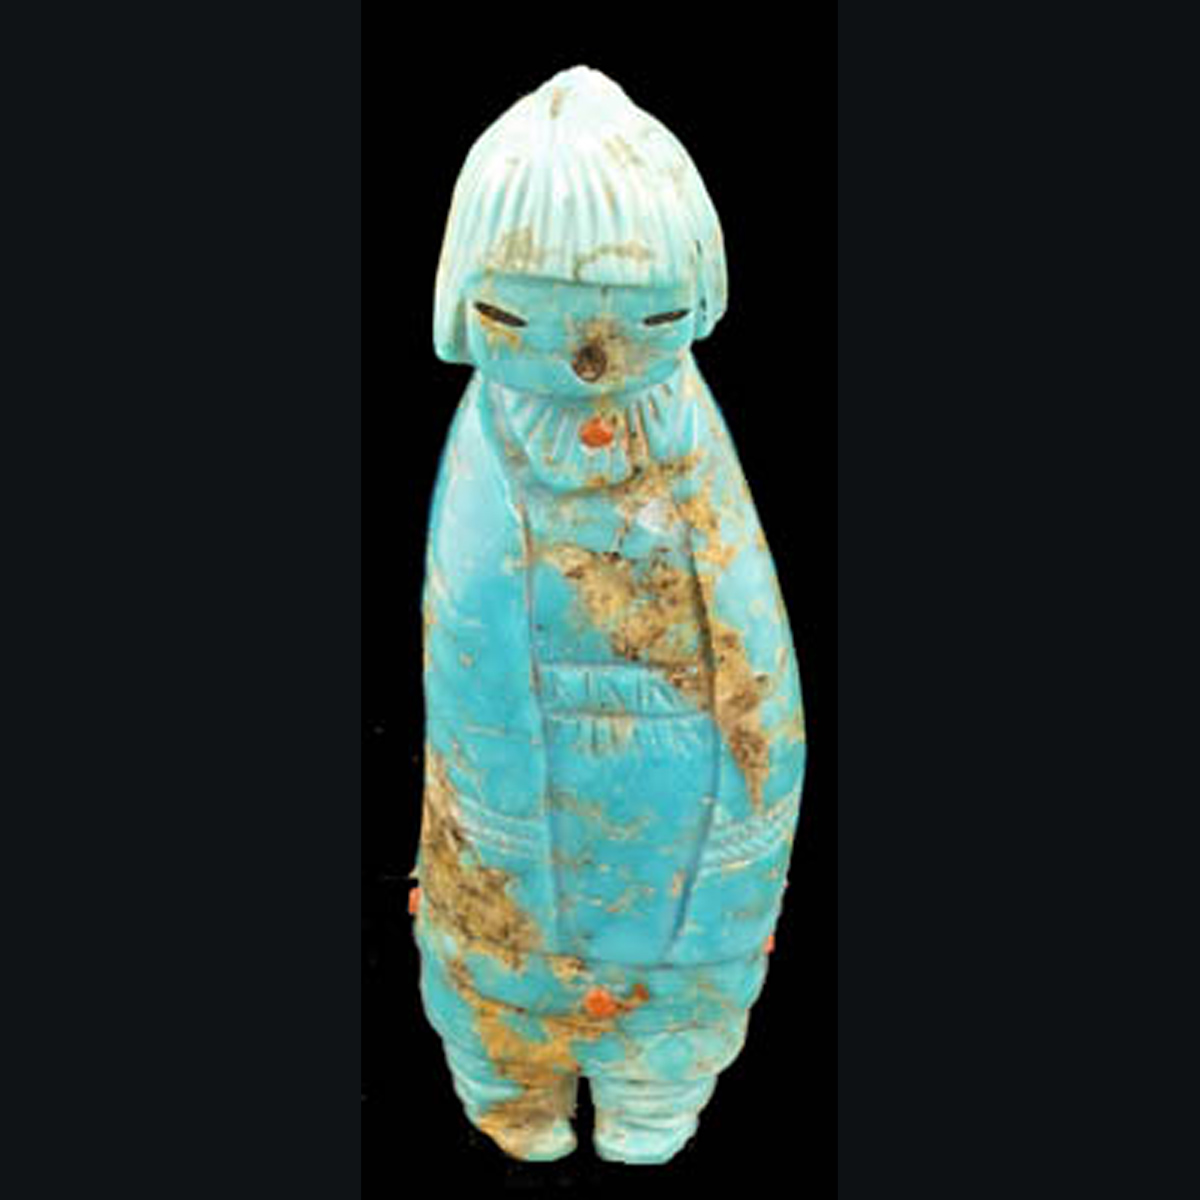 Quandelacy family fetish carvings for sale at ZuniLink.com — Find 